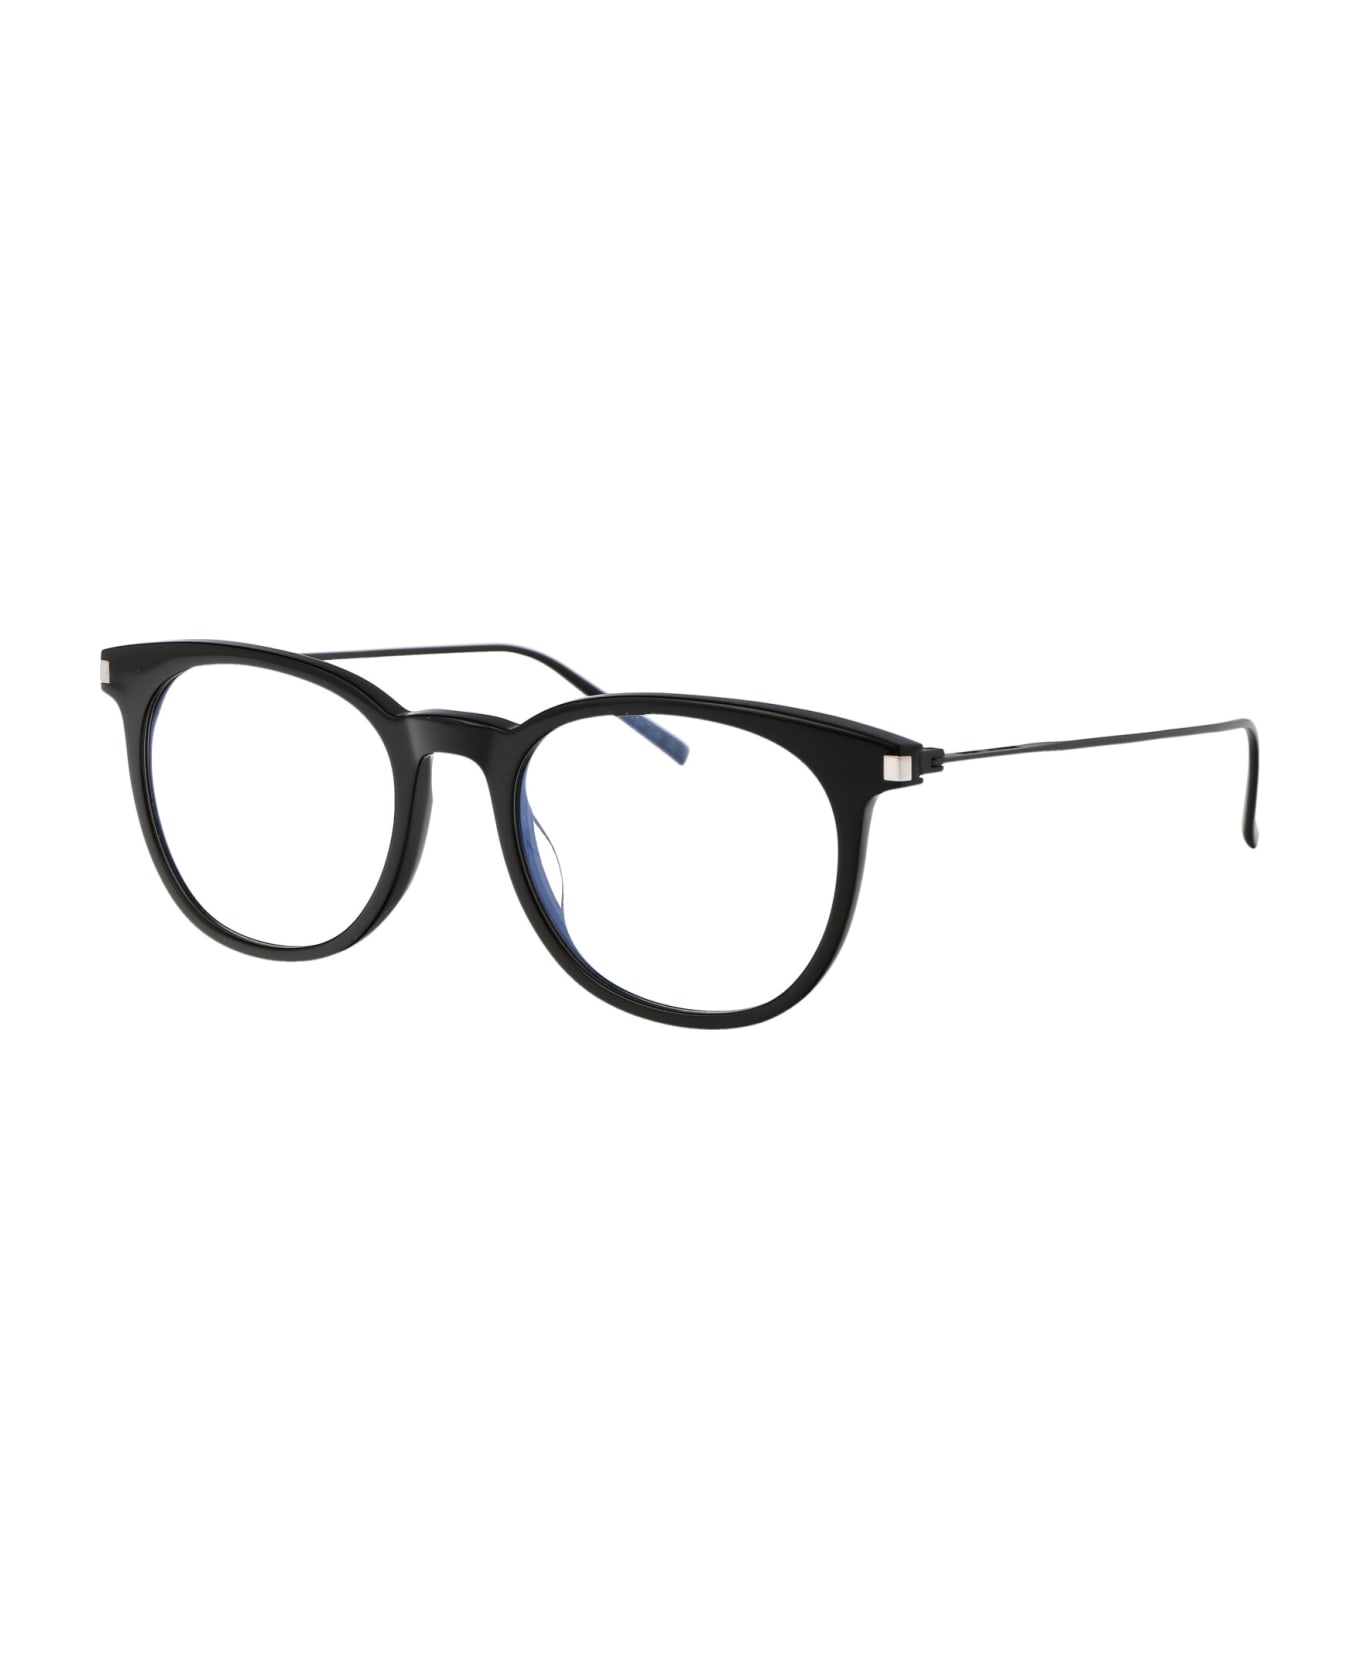 Saint Laurent Eyewear Sl 579 Glasses - 001 BLACK BLACK TRANSPARENT